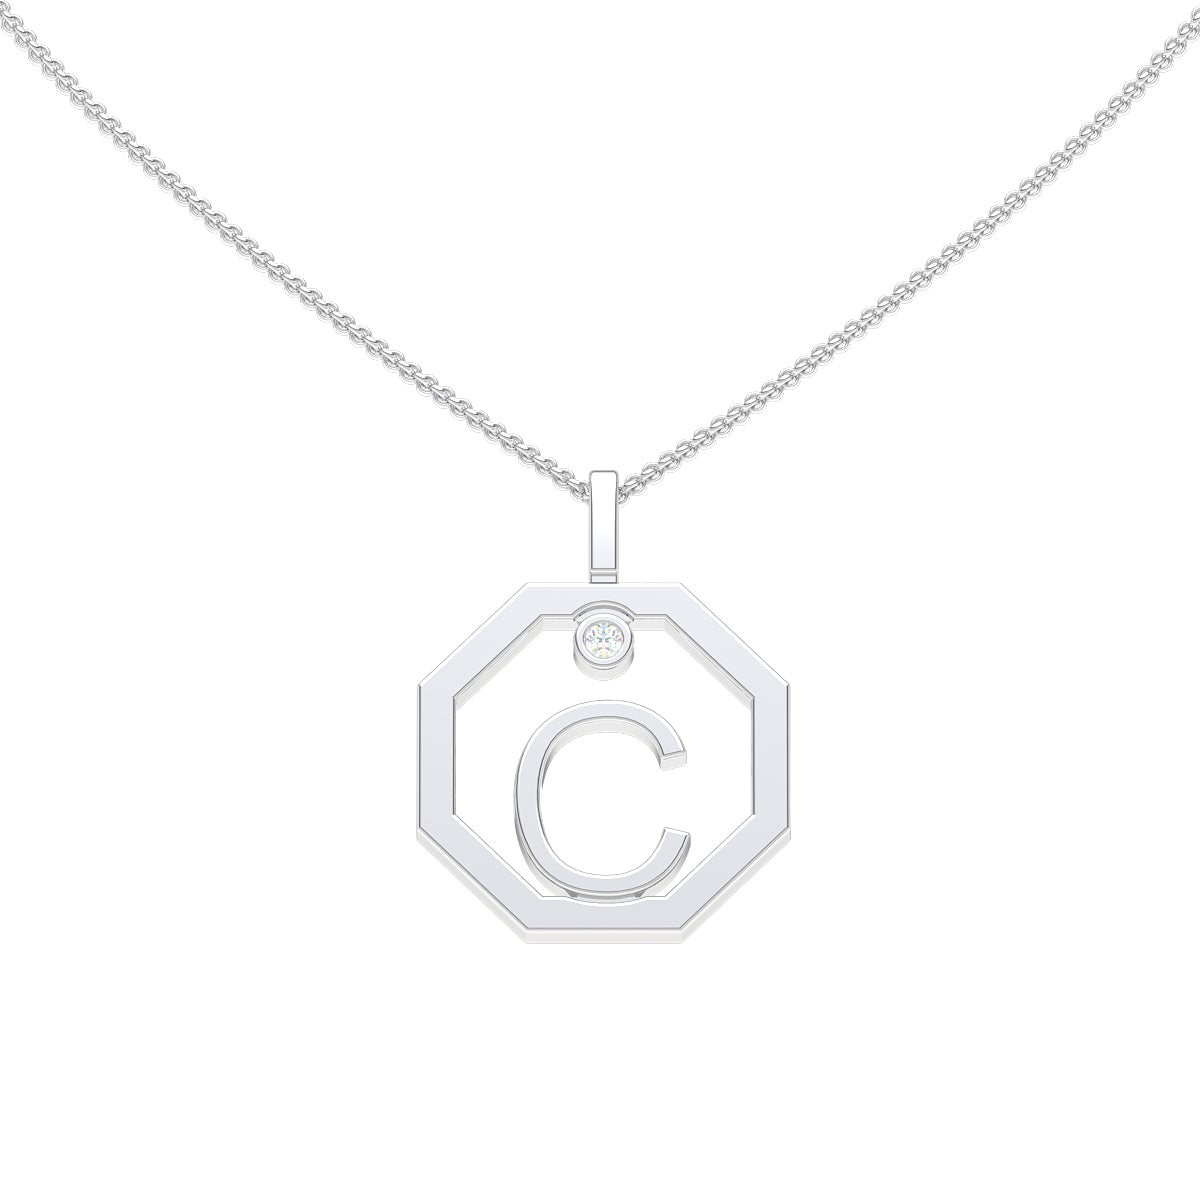 Personalised-Initial-C-diamond-white-gold-pendant-by-Sydney-jewellers-Lizunova